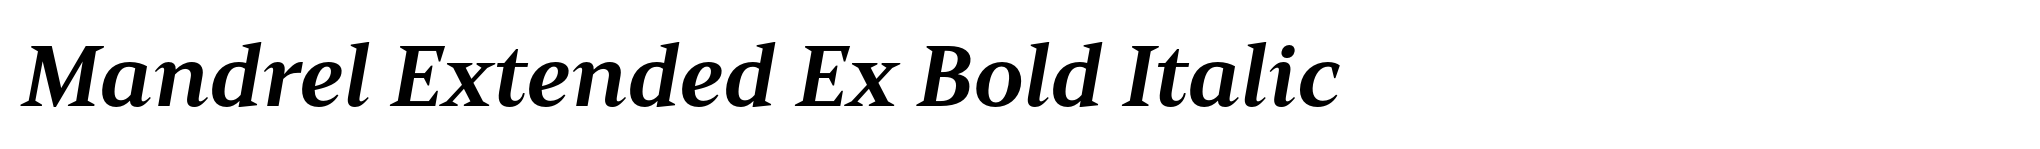 Mandrel Extended Ex Bold Italic image